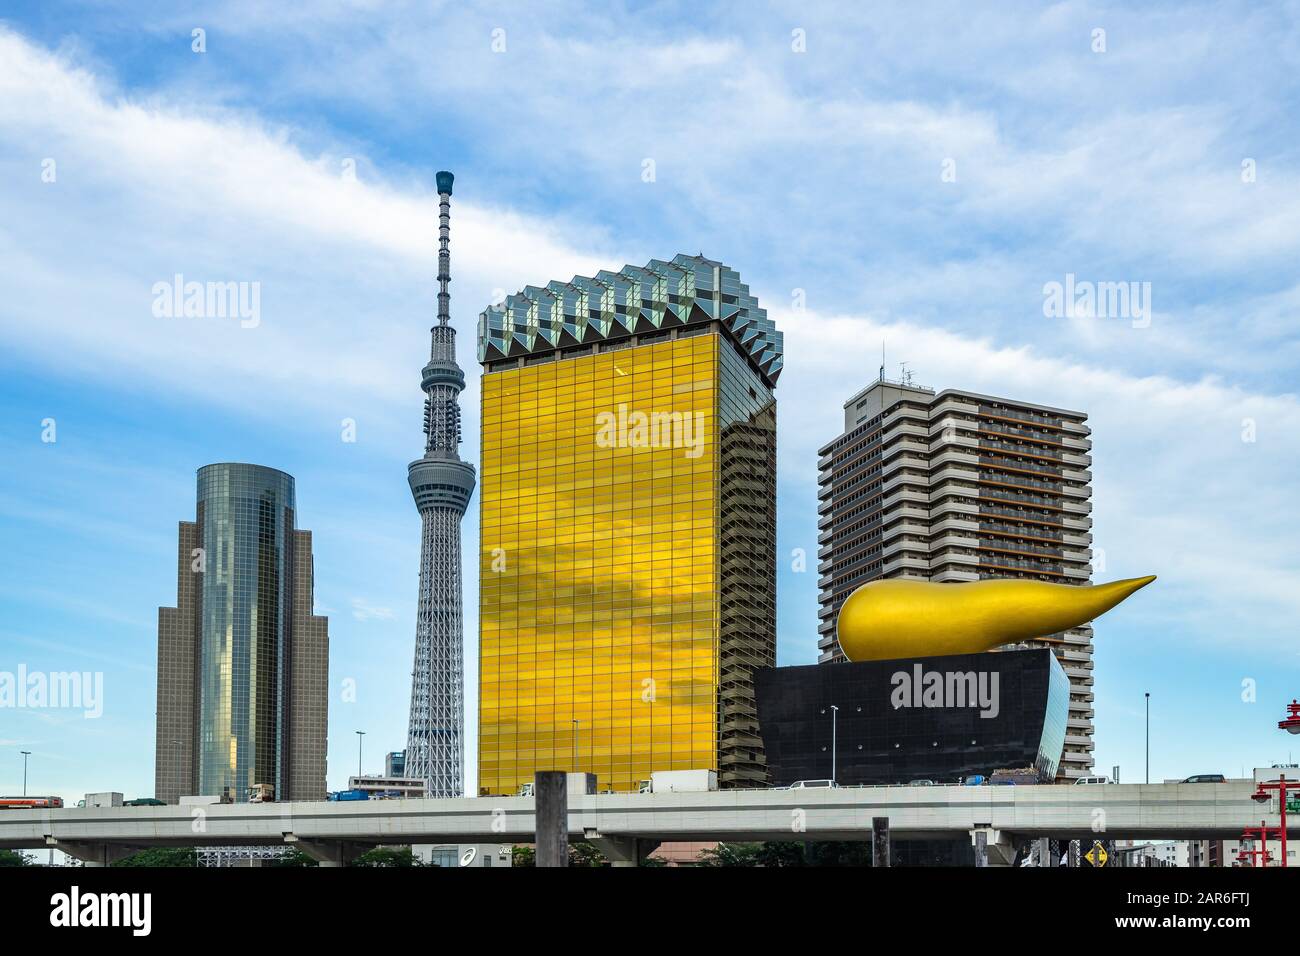 Sky Tree tv tower building with the Asahi building headquarters along Sumida river, Tokyo Stock Photo